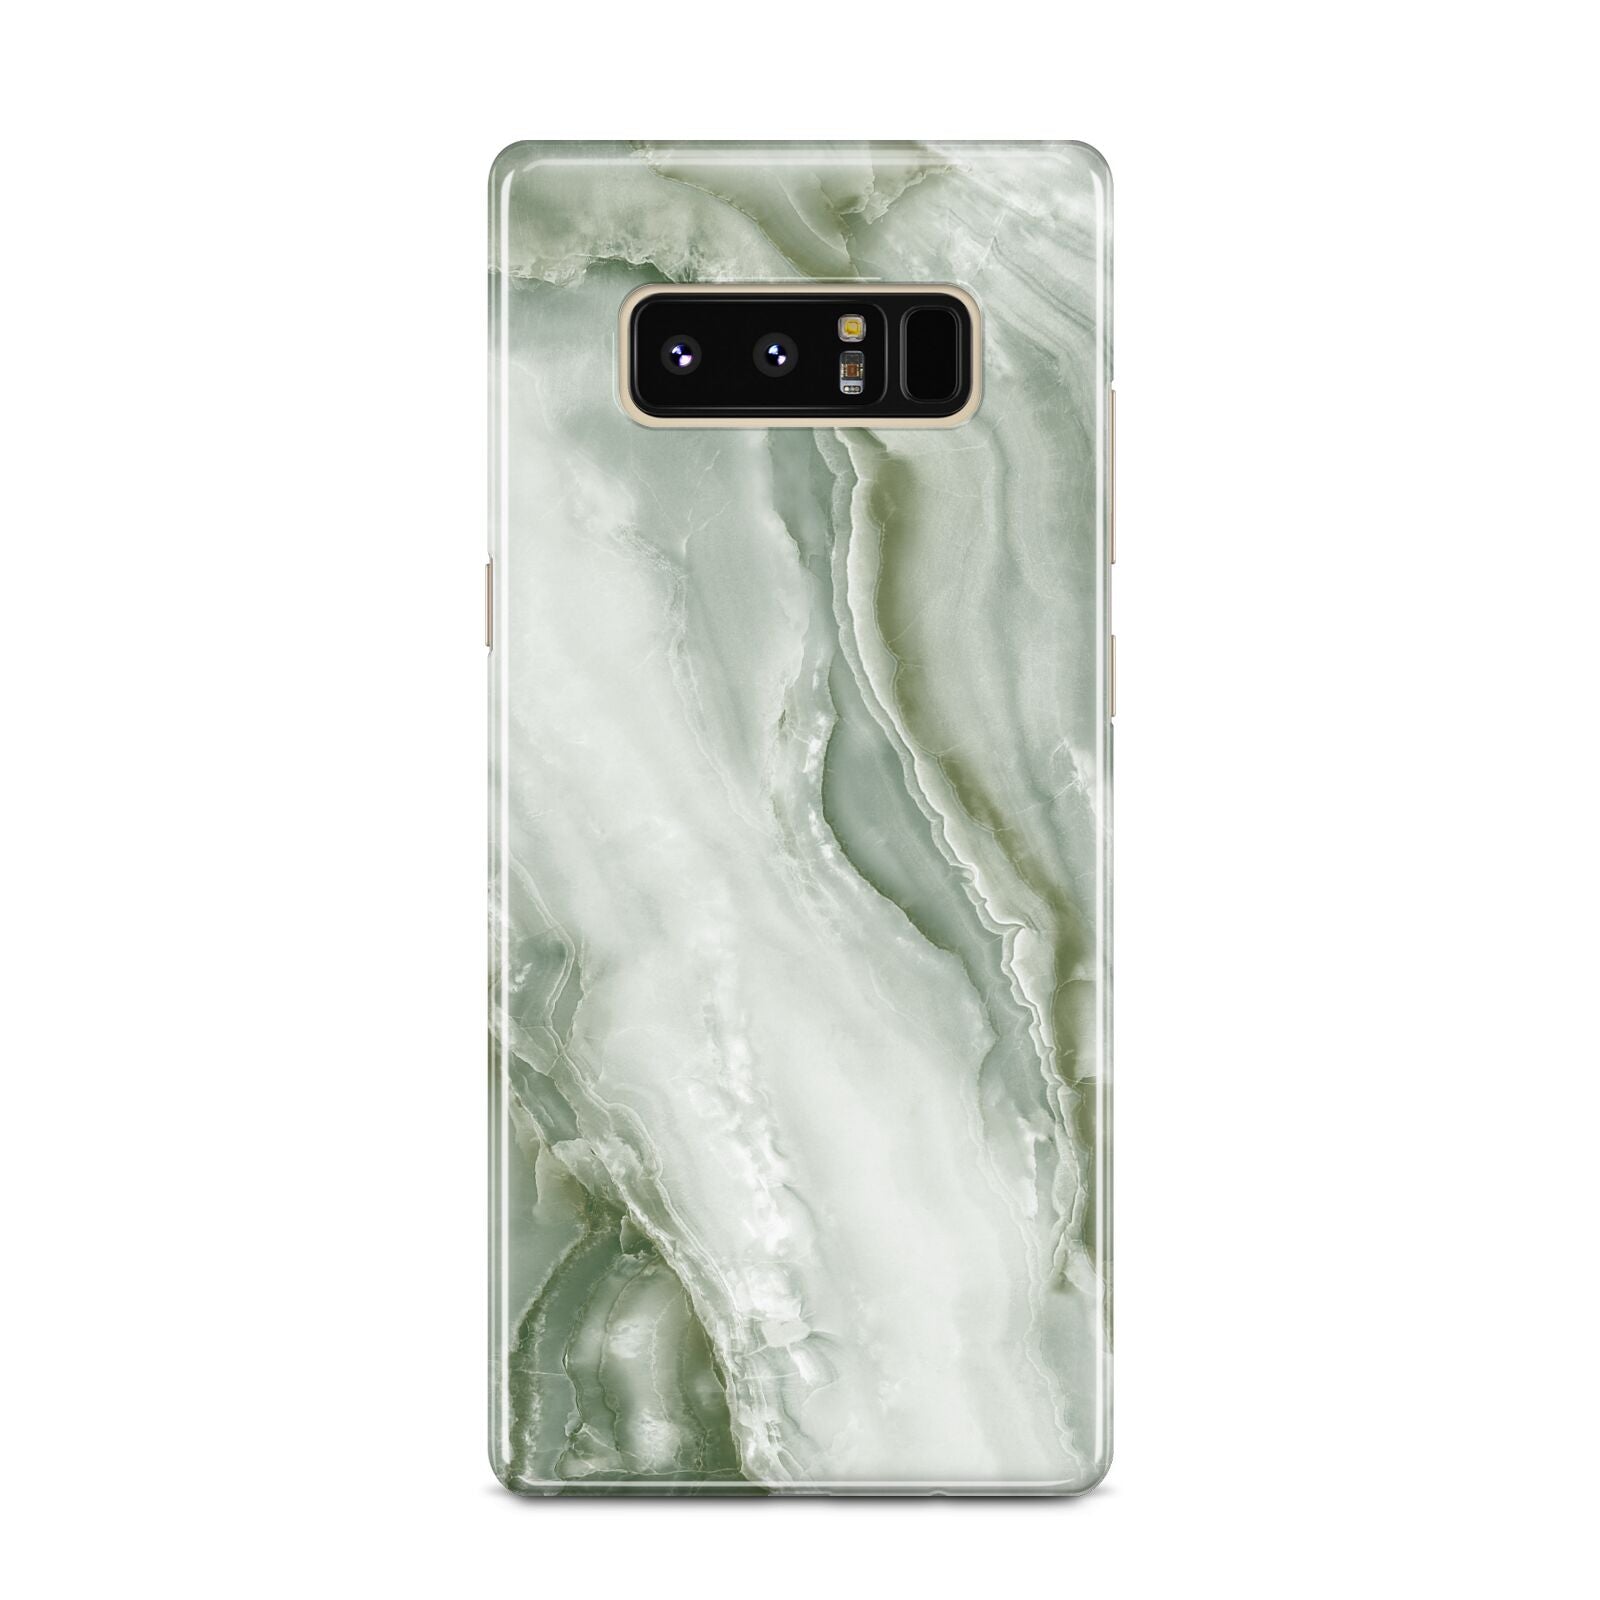 Pistachio Green Marble Samsung Galaxy Note 8 Case